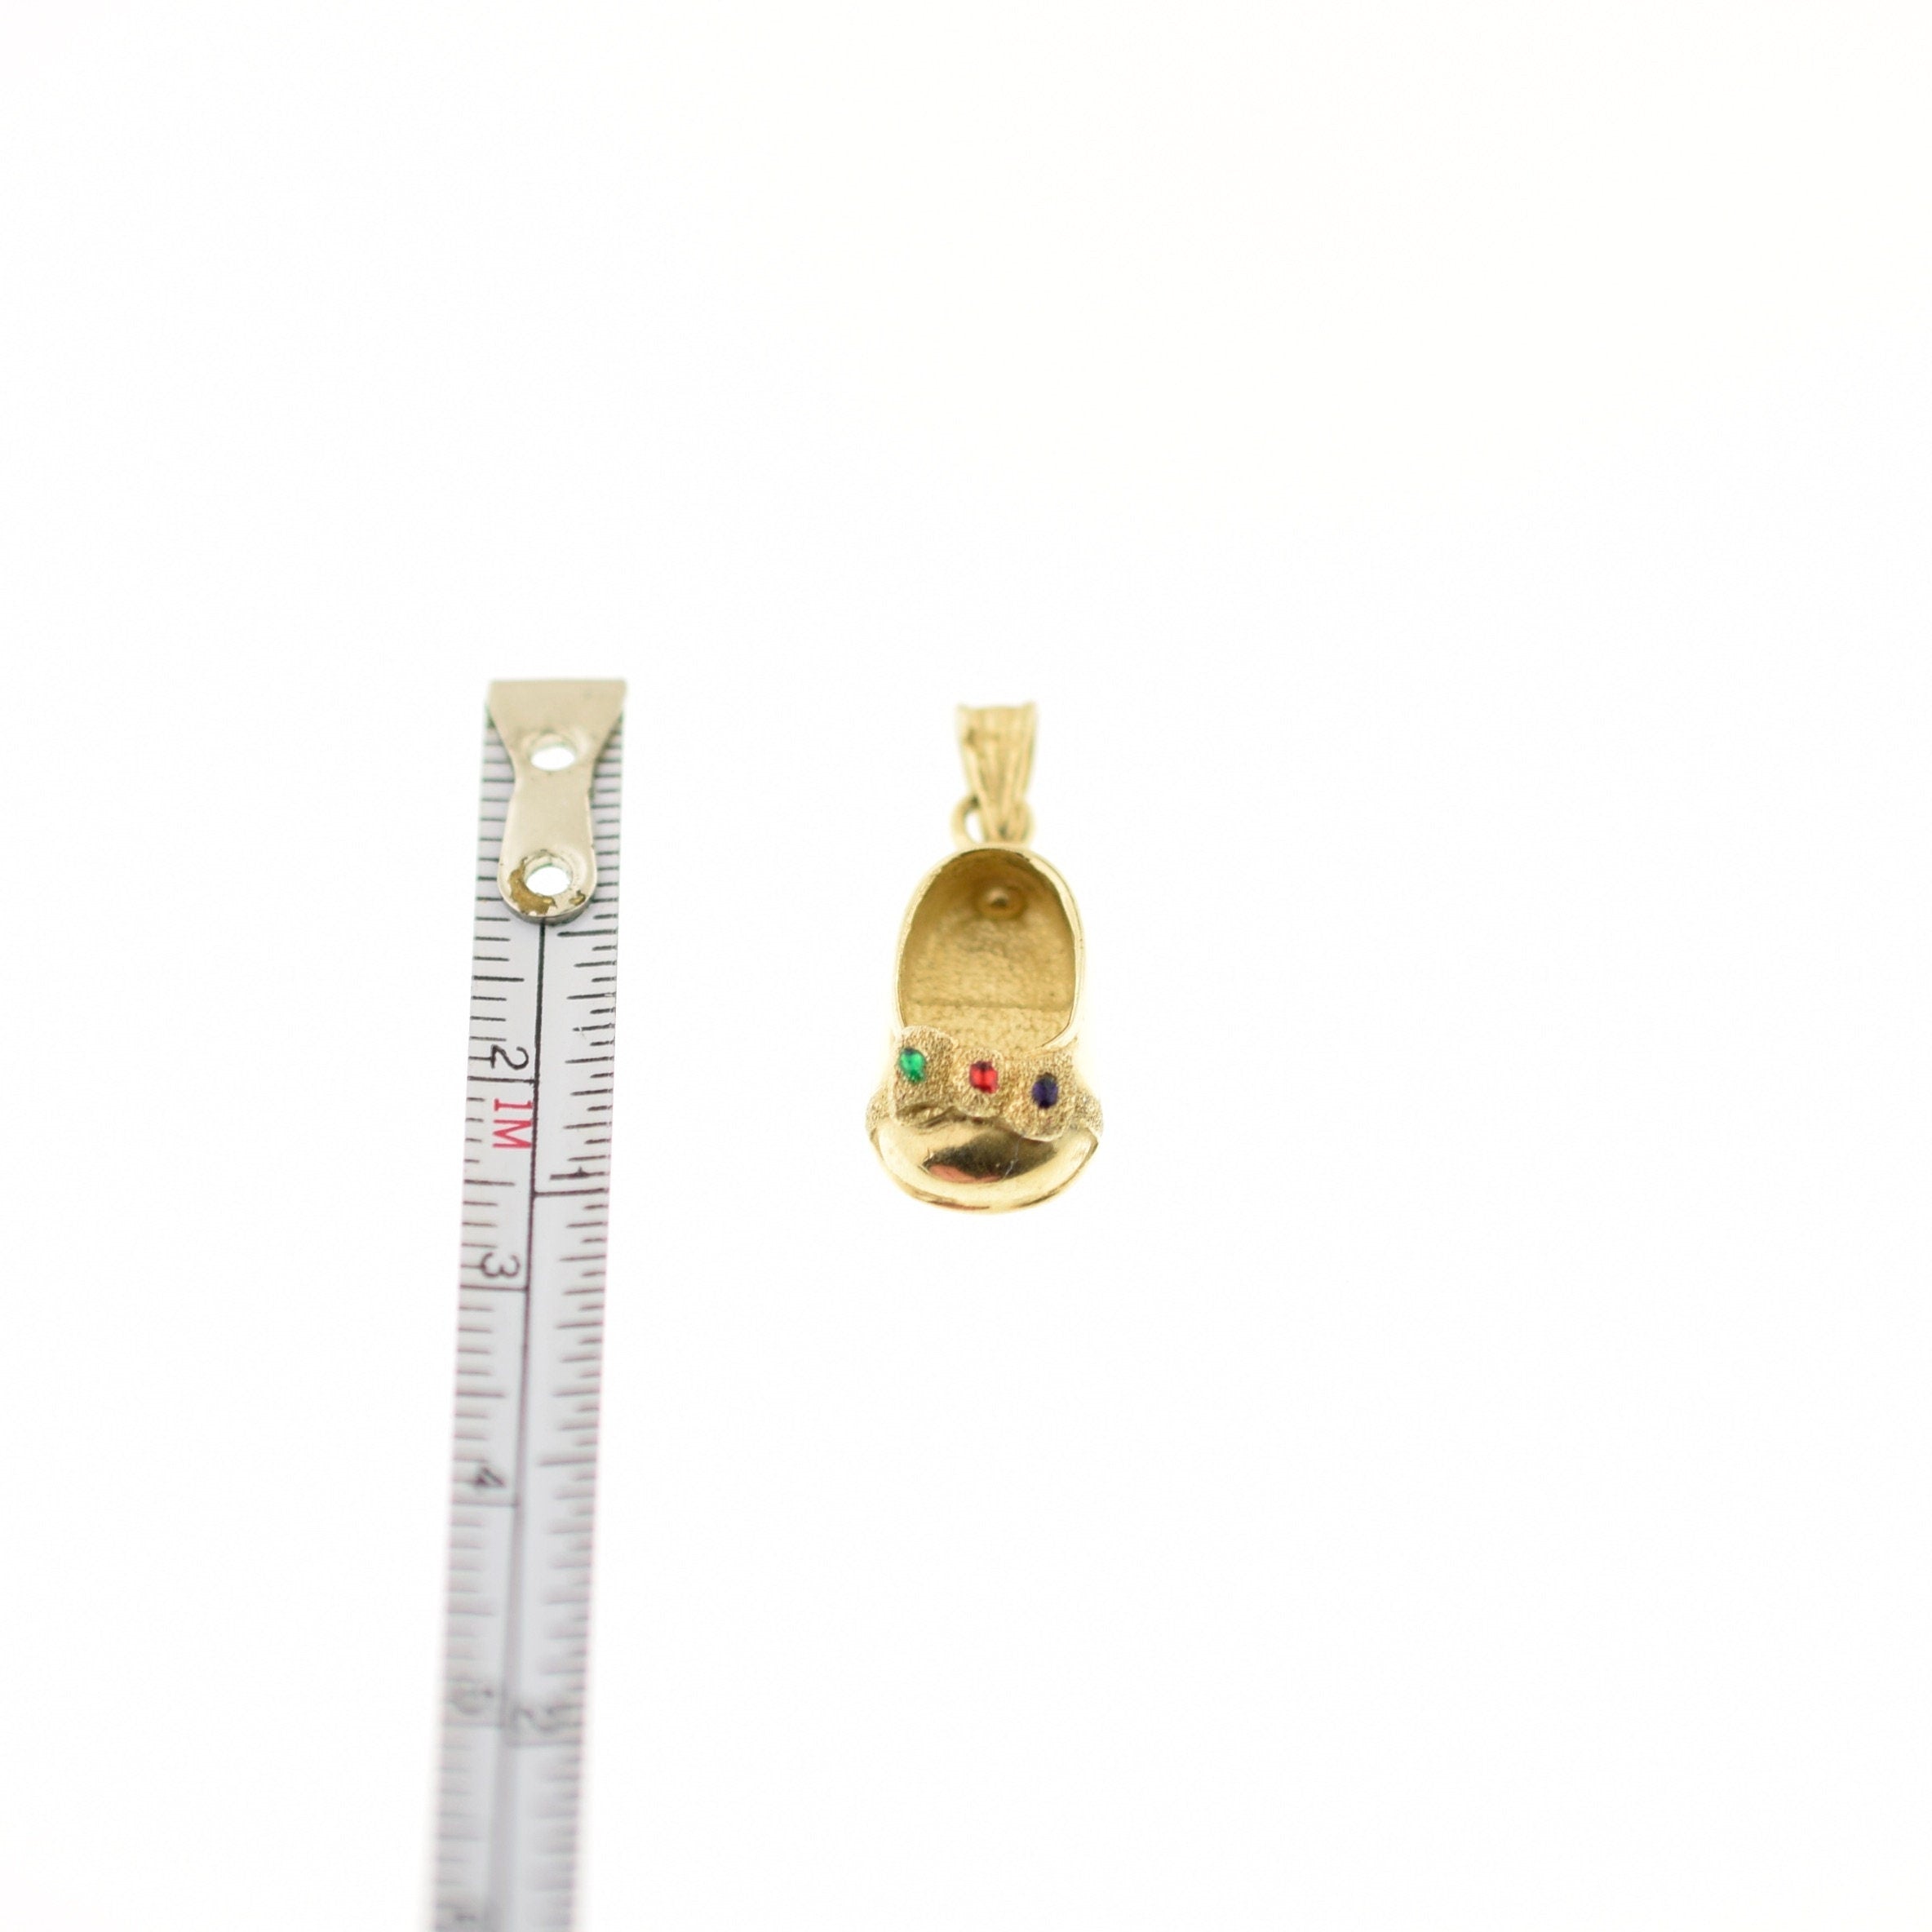 14k Yellow Gold Baby Shoe Birthstone Charm or Pendant